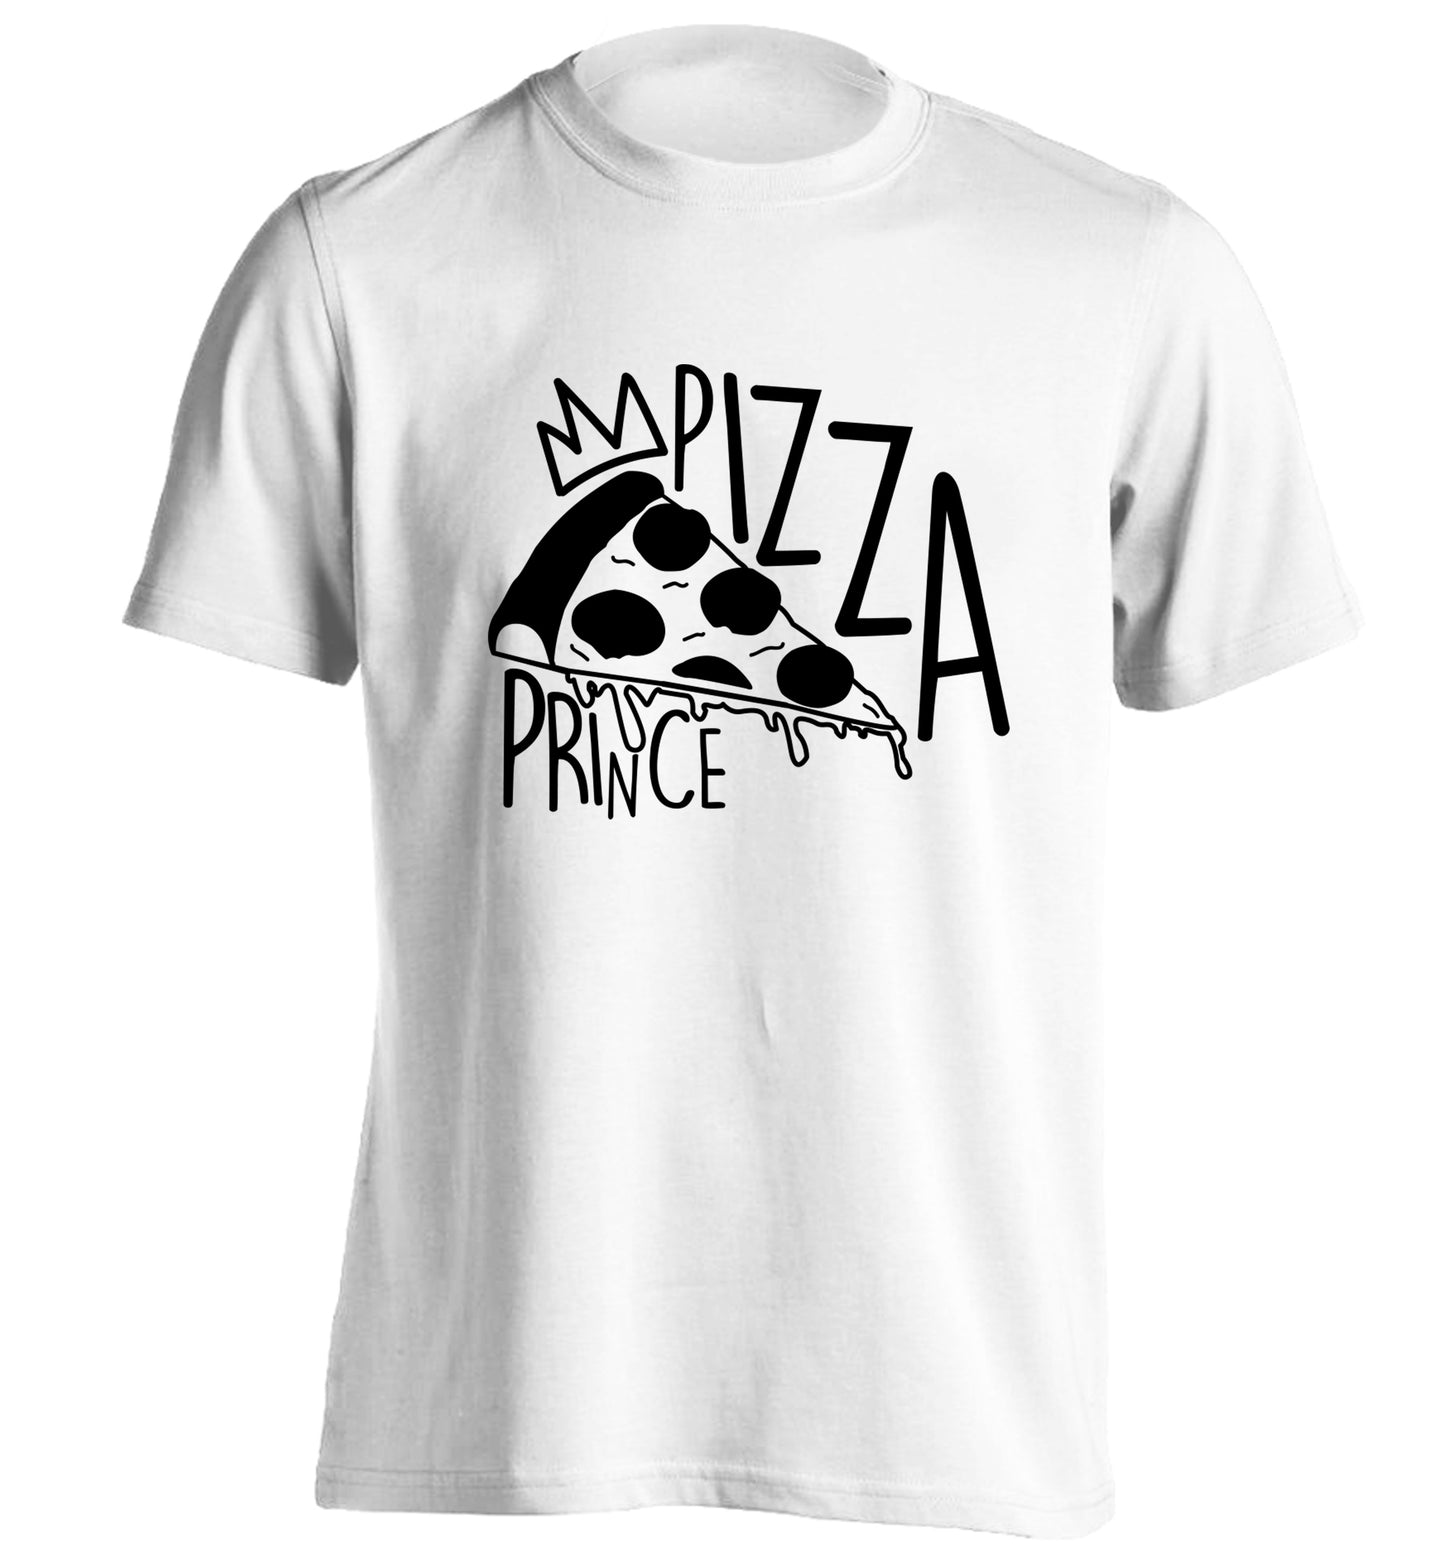 Pizza Prince adults unisex white Tshirt 2XL